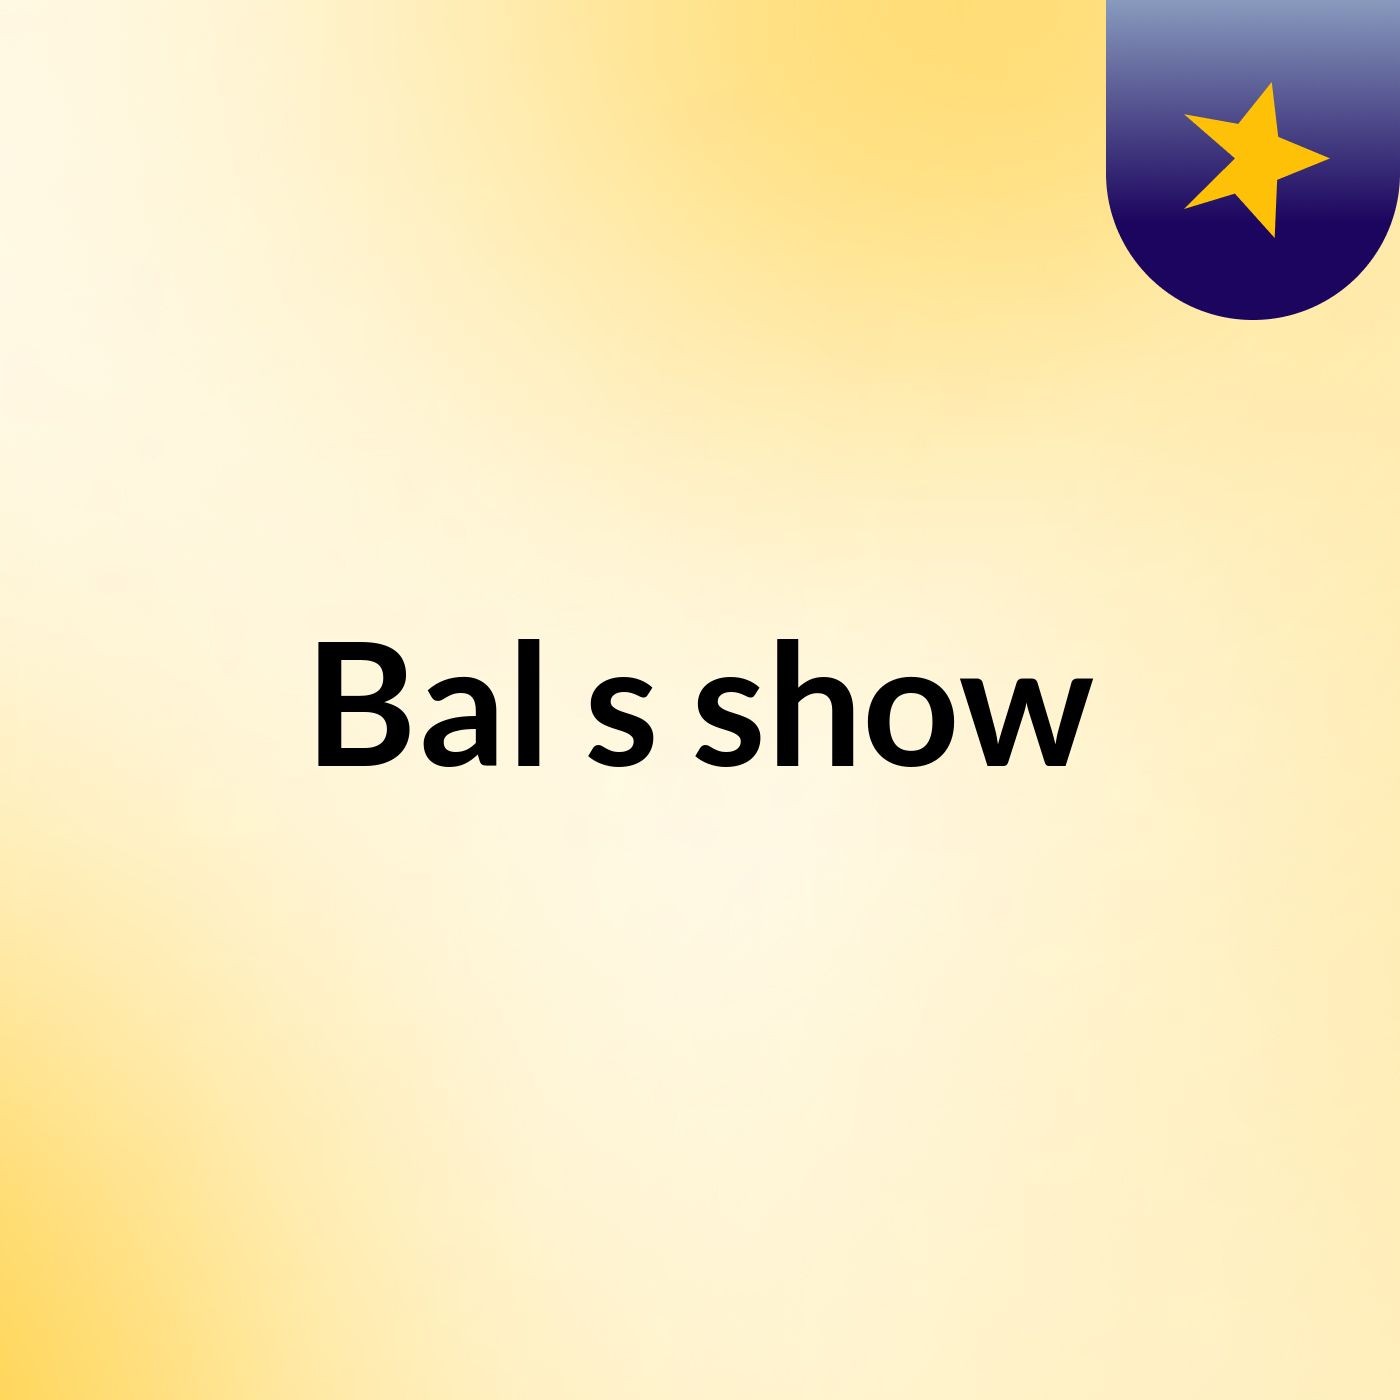 Bal's show